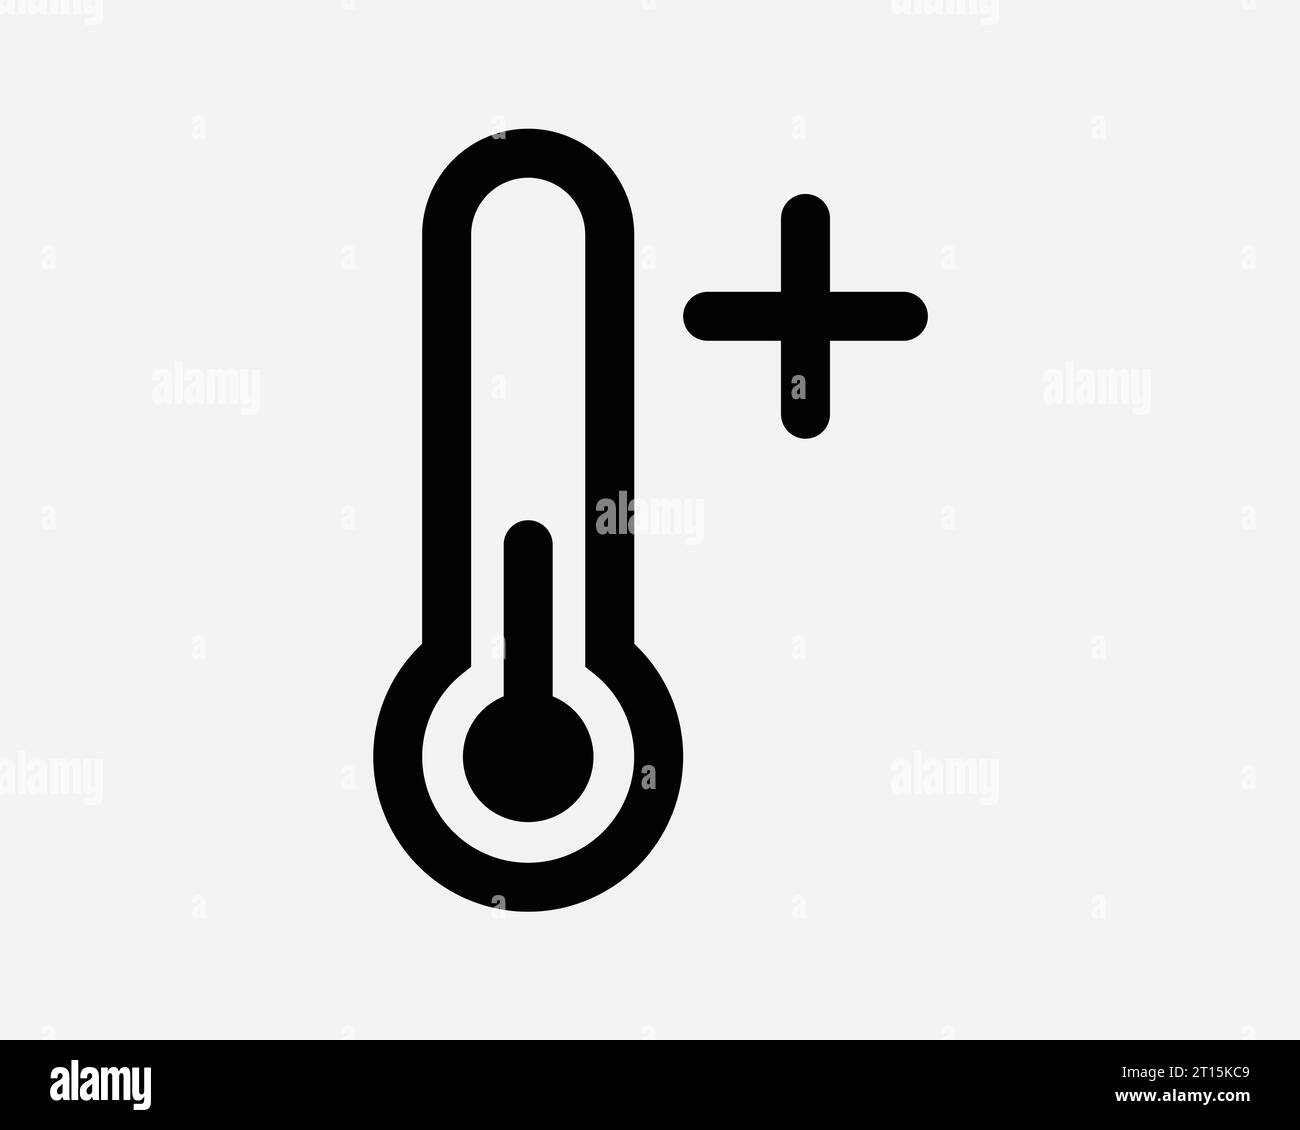 Thermometer icon high low temperature Banque d'images noir et blanc - Alamy